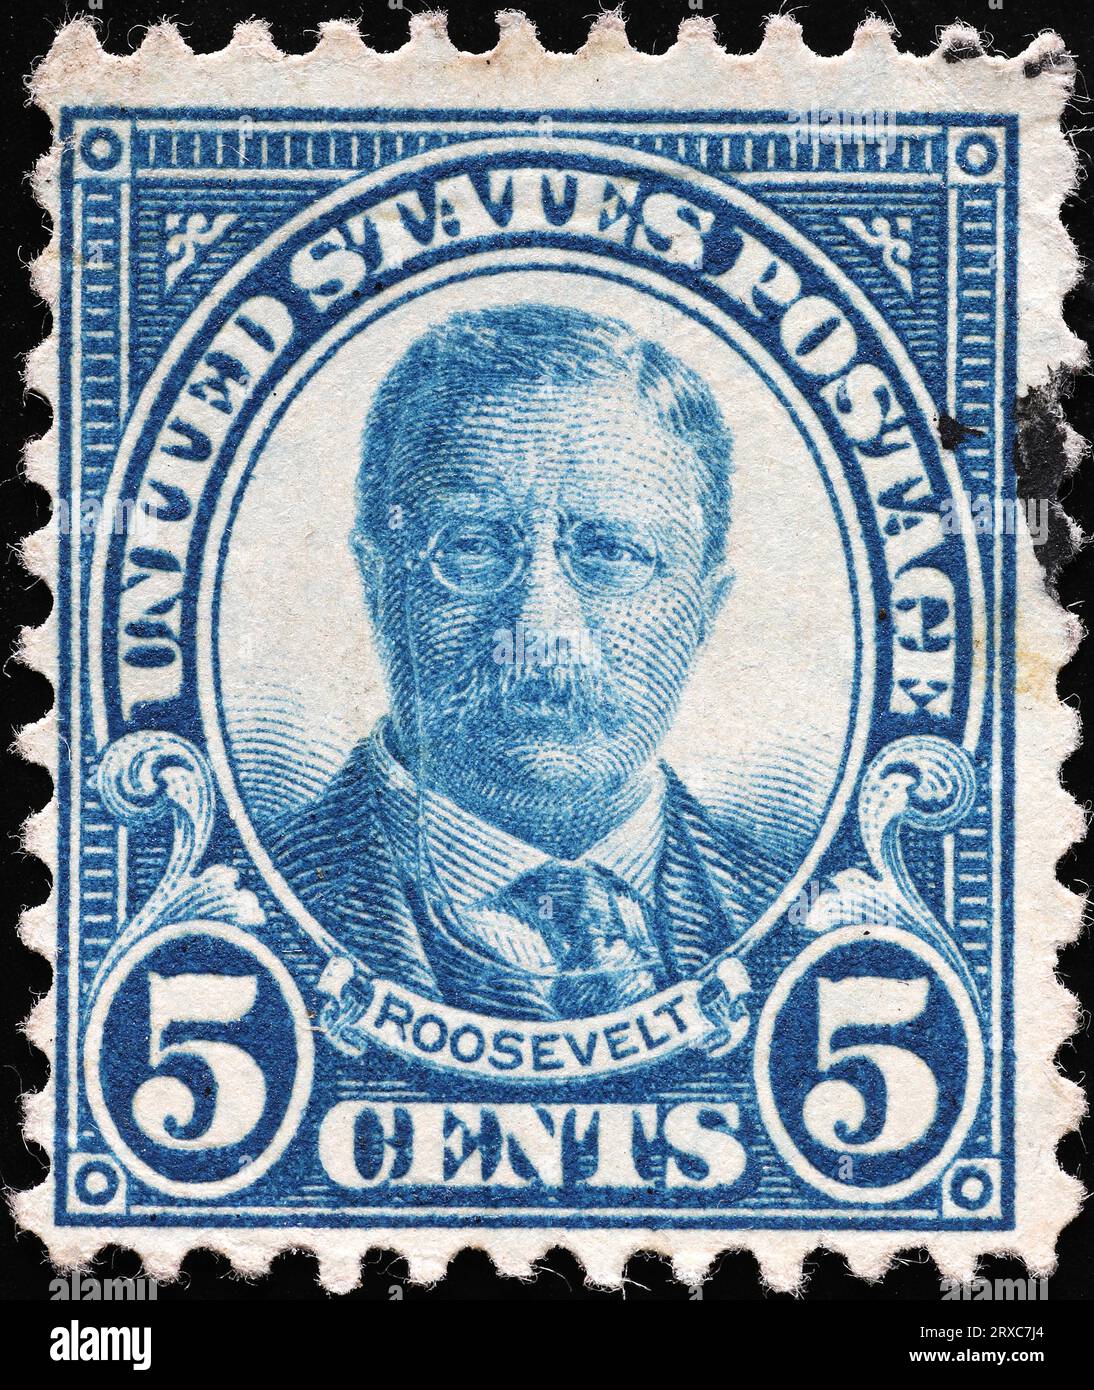 US President Theodore Rooosevelt on old postage stamp Stock Photo